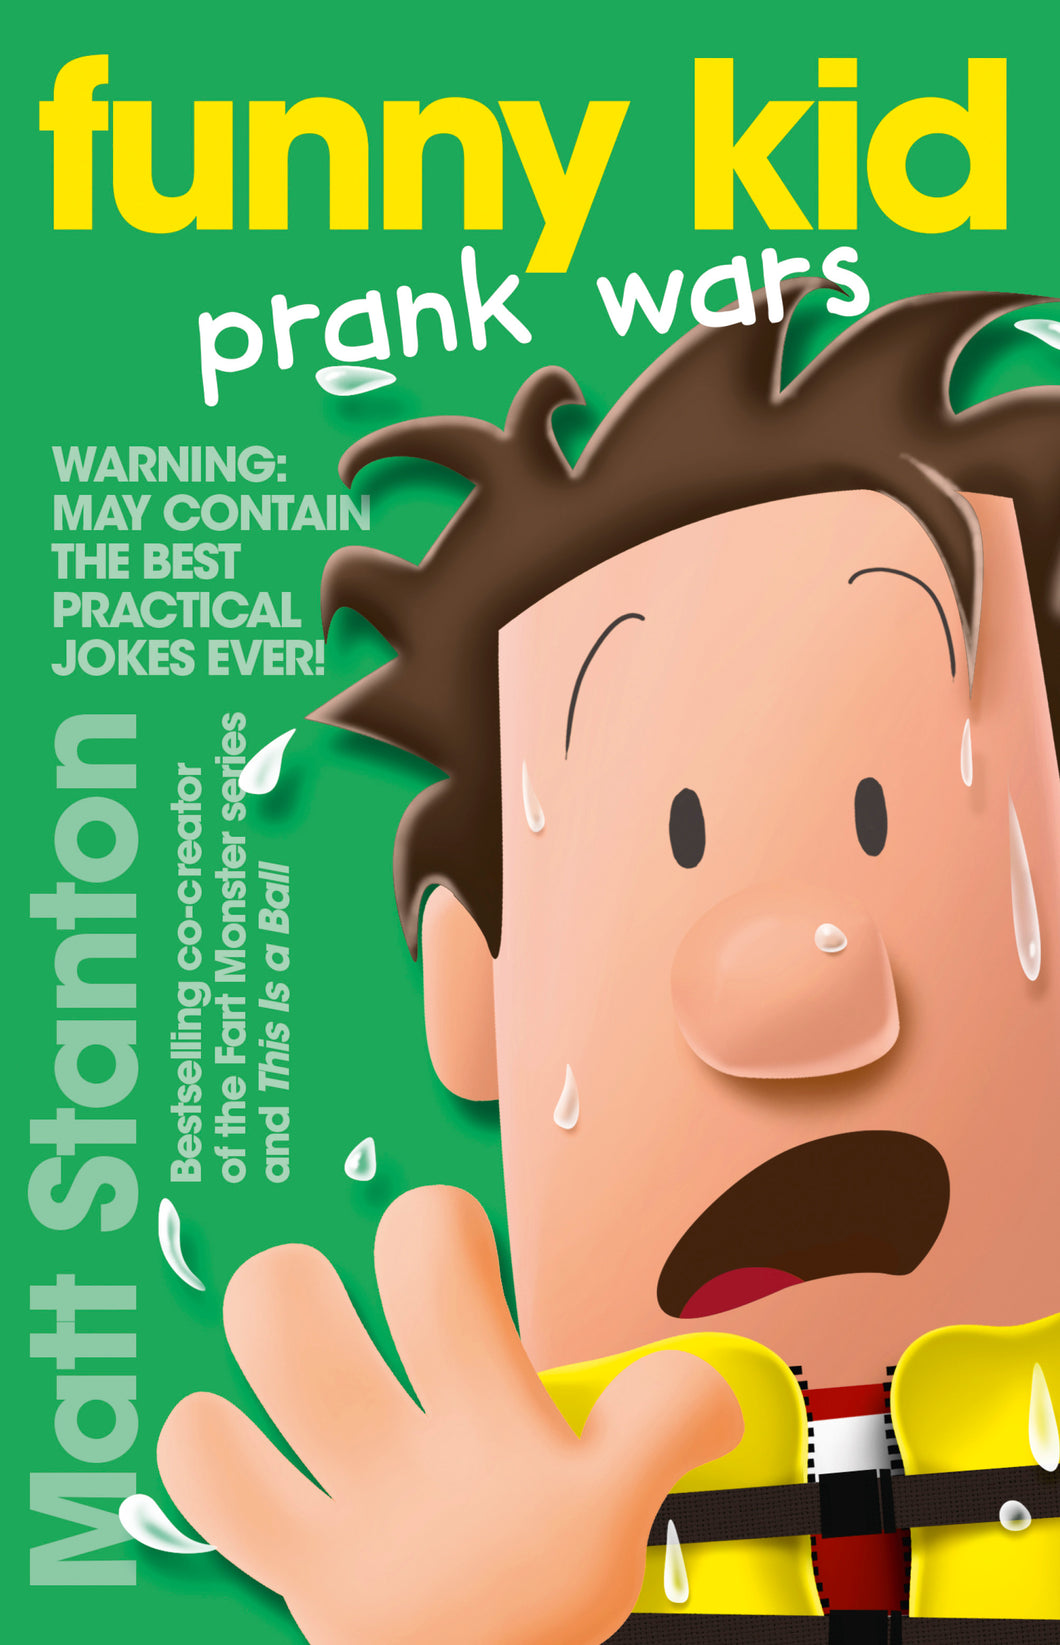 Funny Kid Prank Wars by Matt Stanton